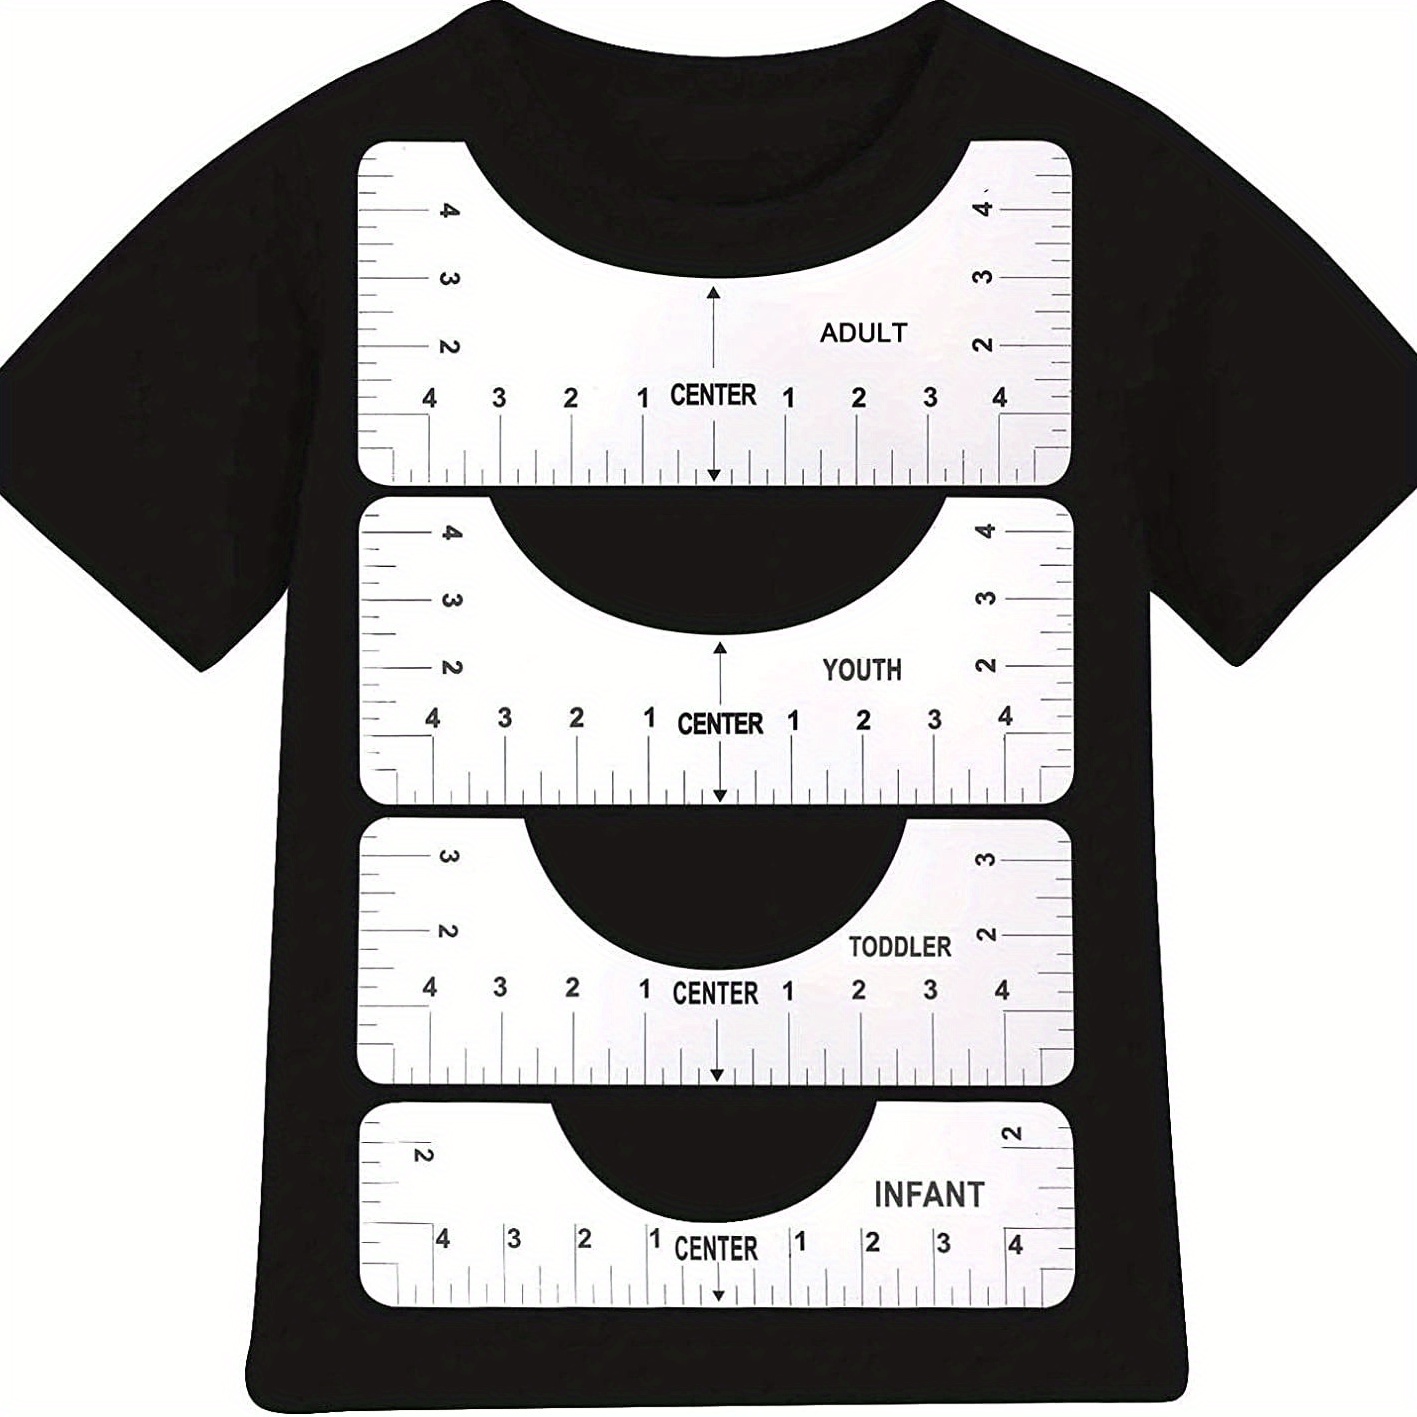 4pcs T-Shirt Ruler Guide, T-Shirt Ruler Guide For Vinyl Alignment, Premium  T-Shirt Rulers To Center Designs, Professional T-Shirt Ruler Guide